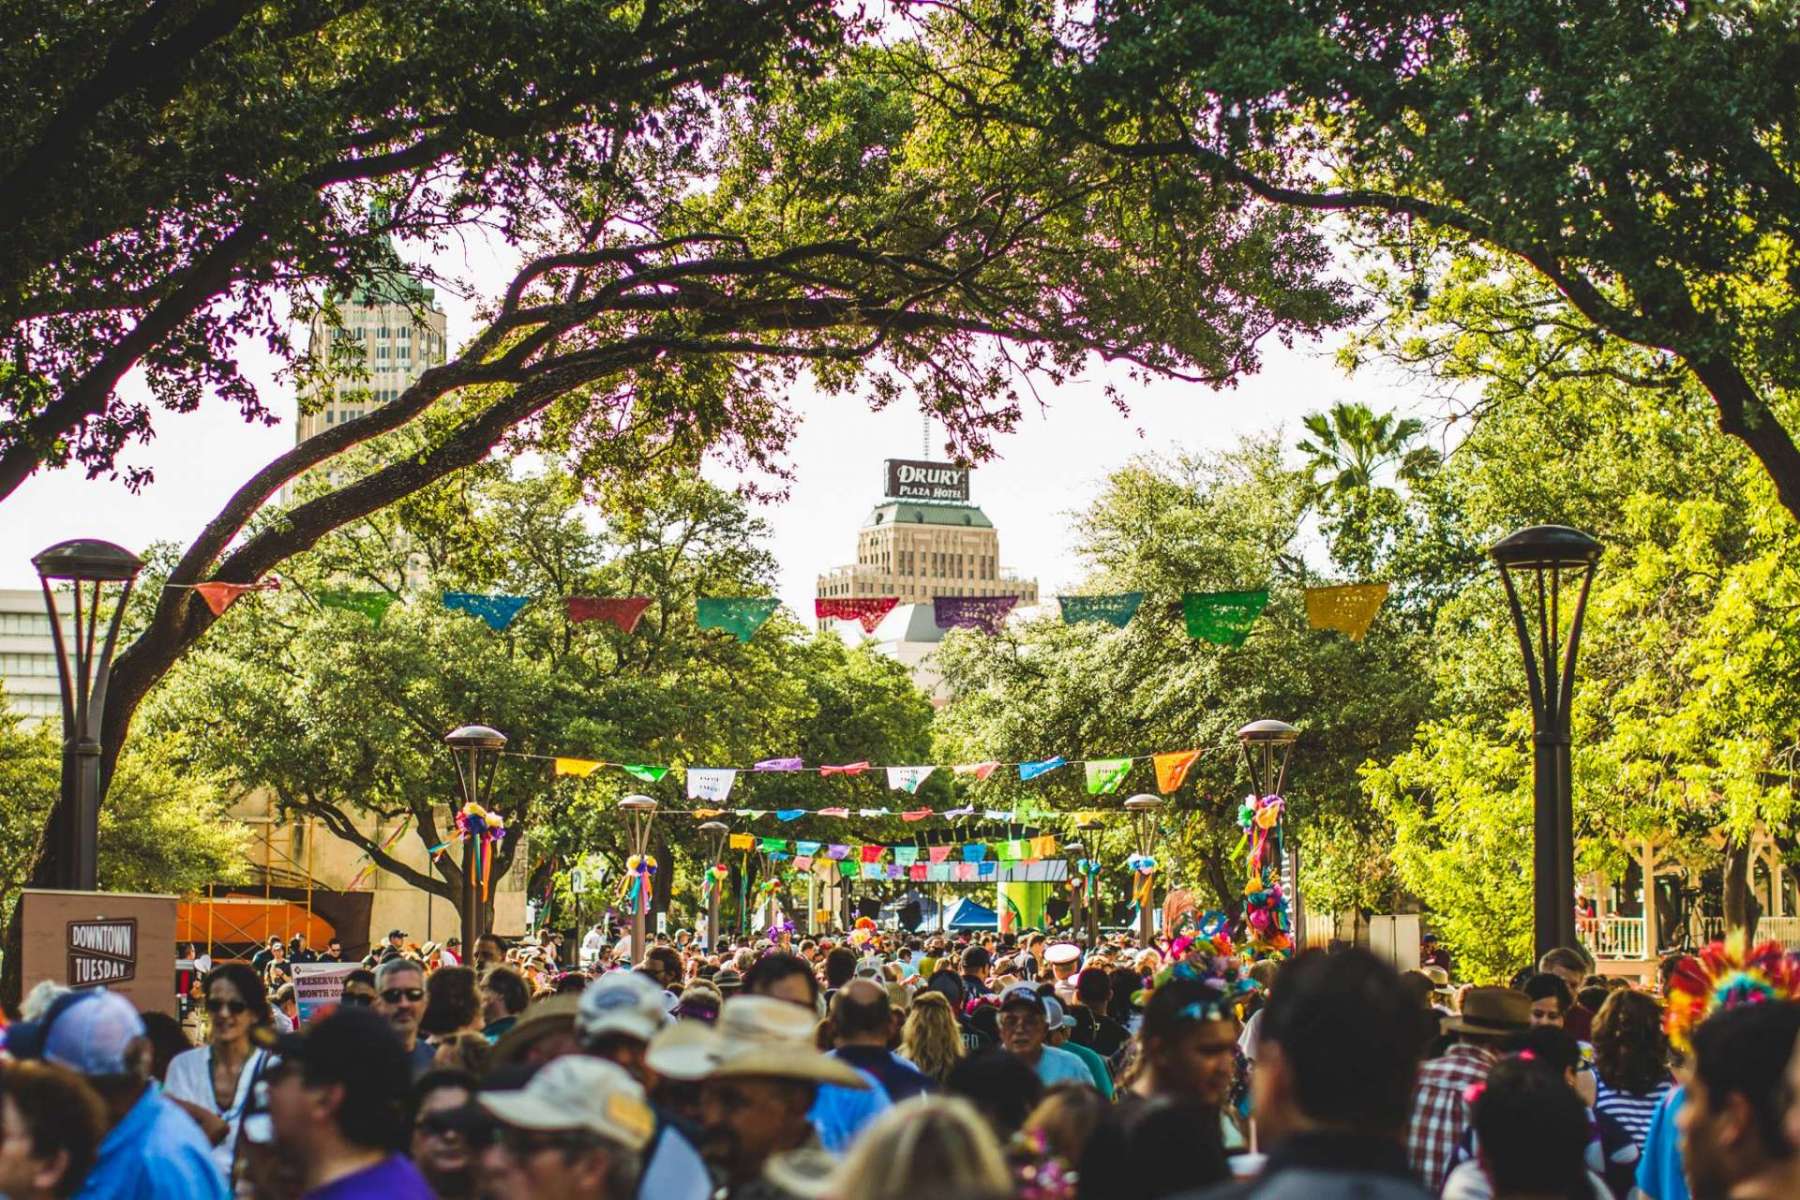 Fiesta San Antonio Festival Returns With 100+ Events This Spring